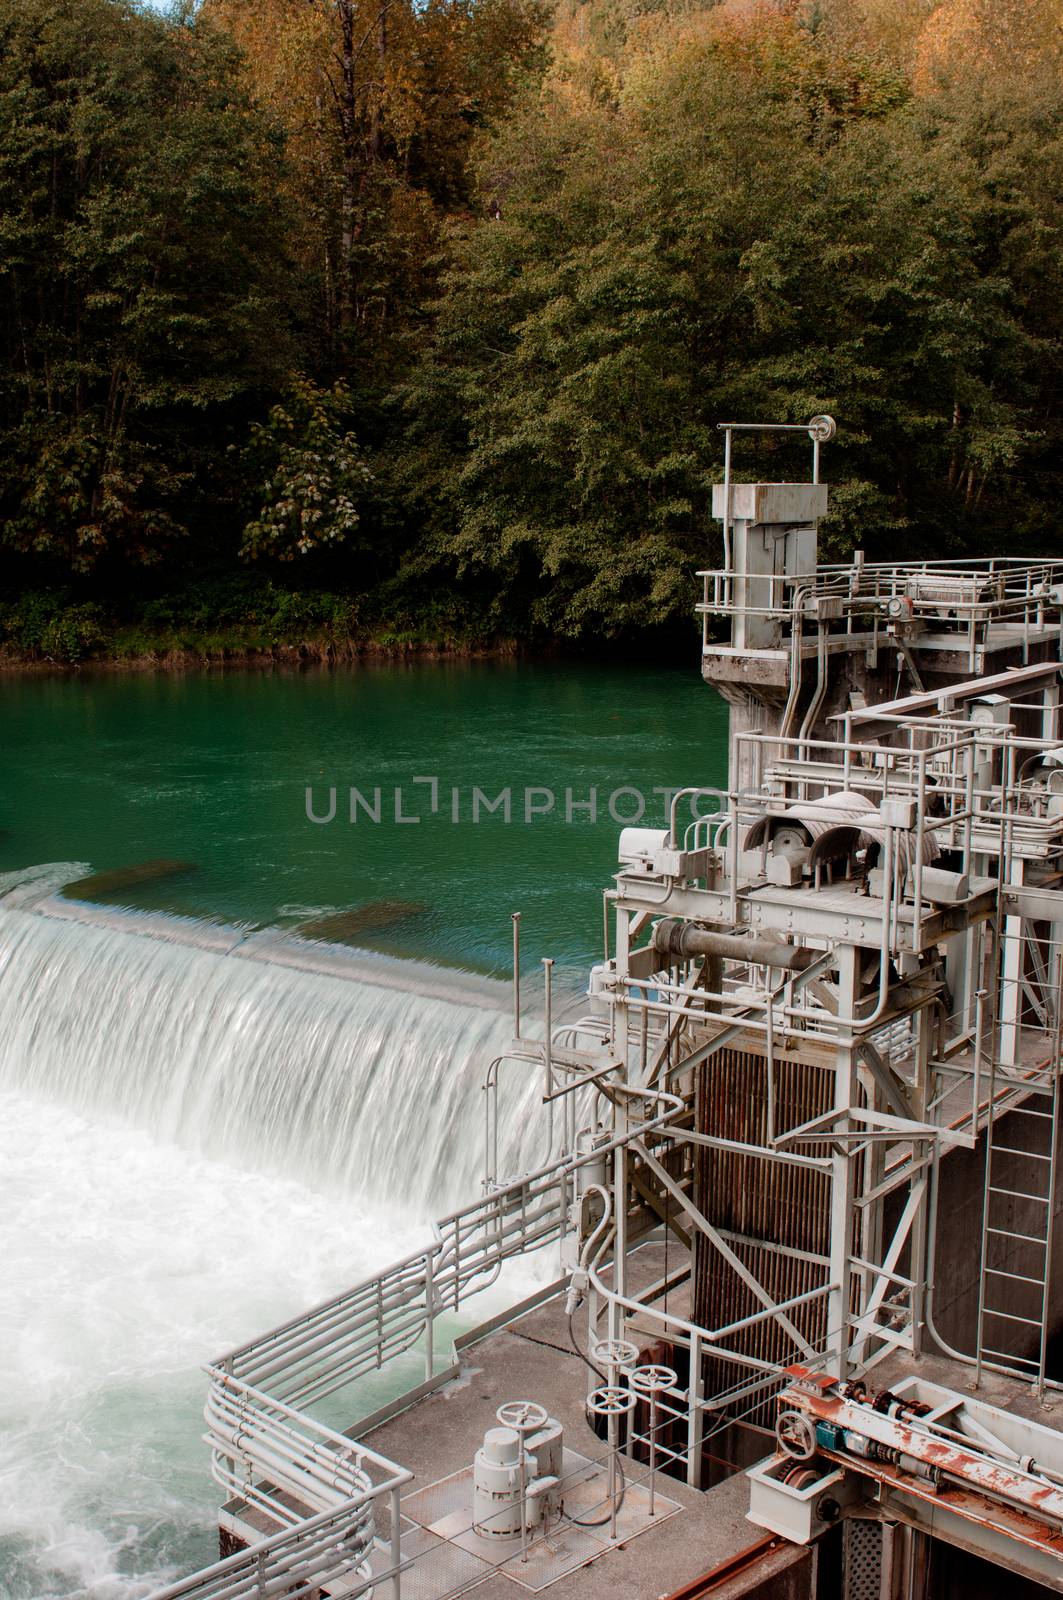 Hydropower Station in Washington State, USA